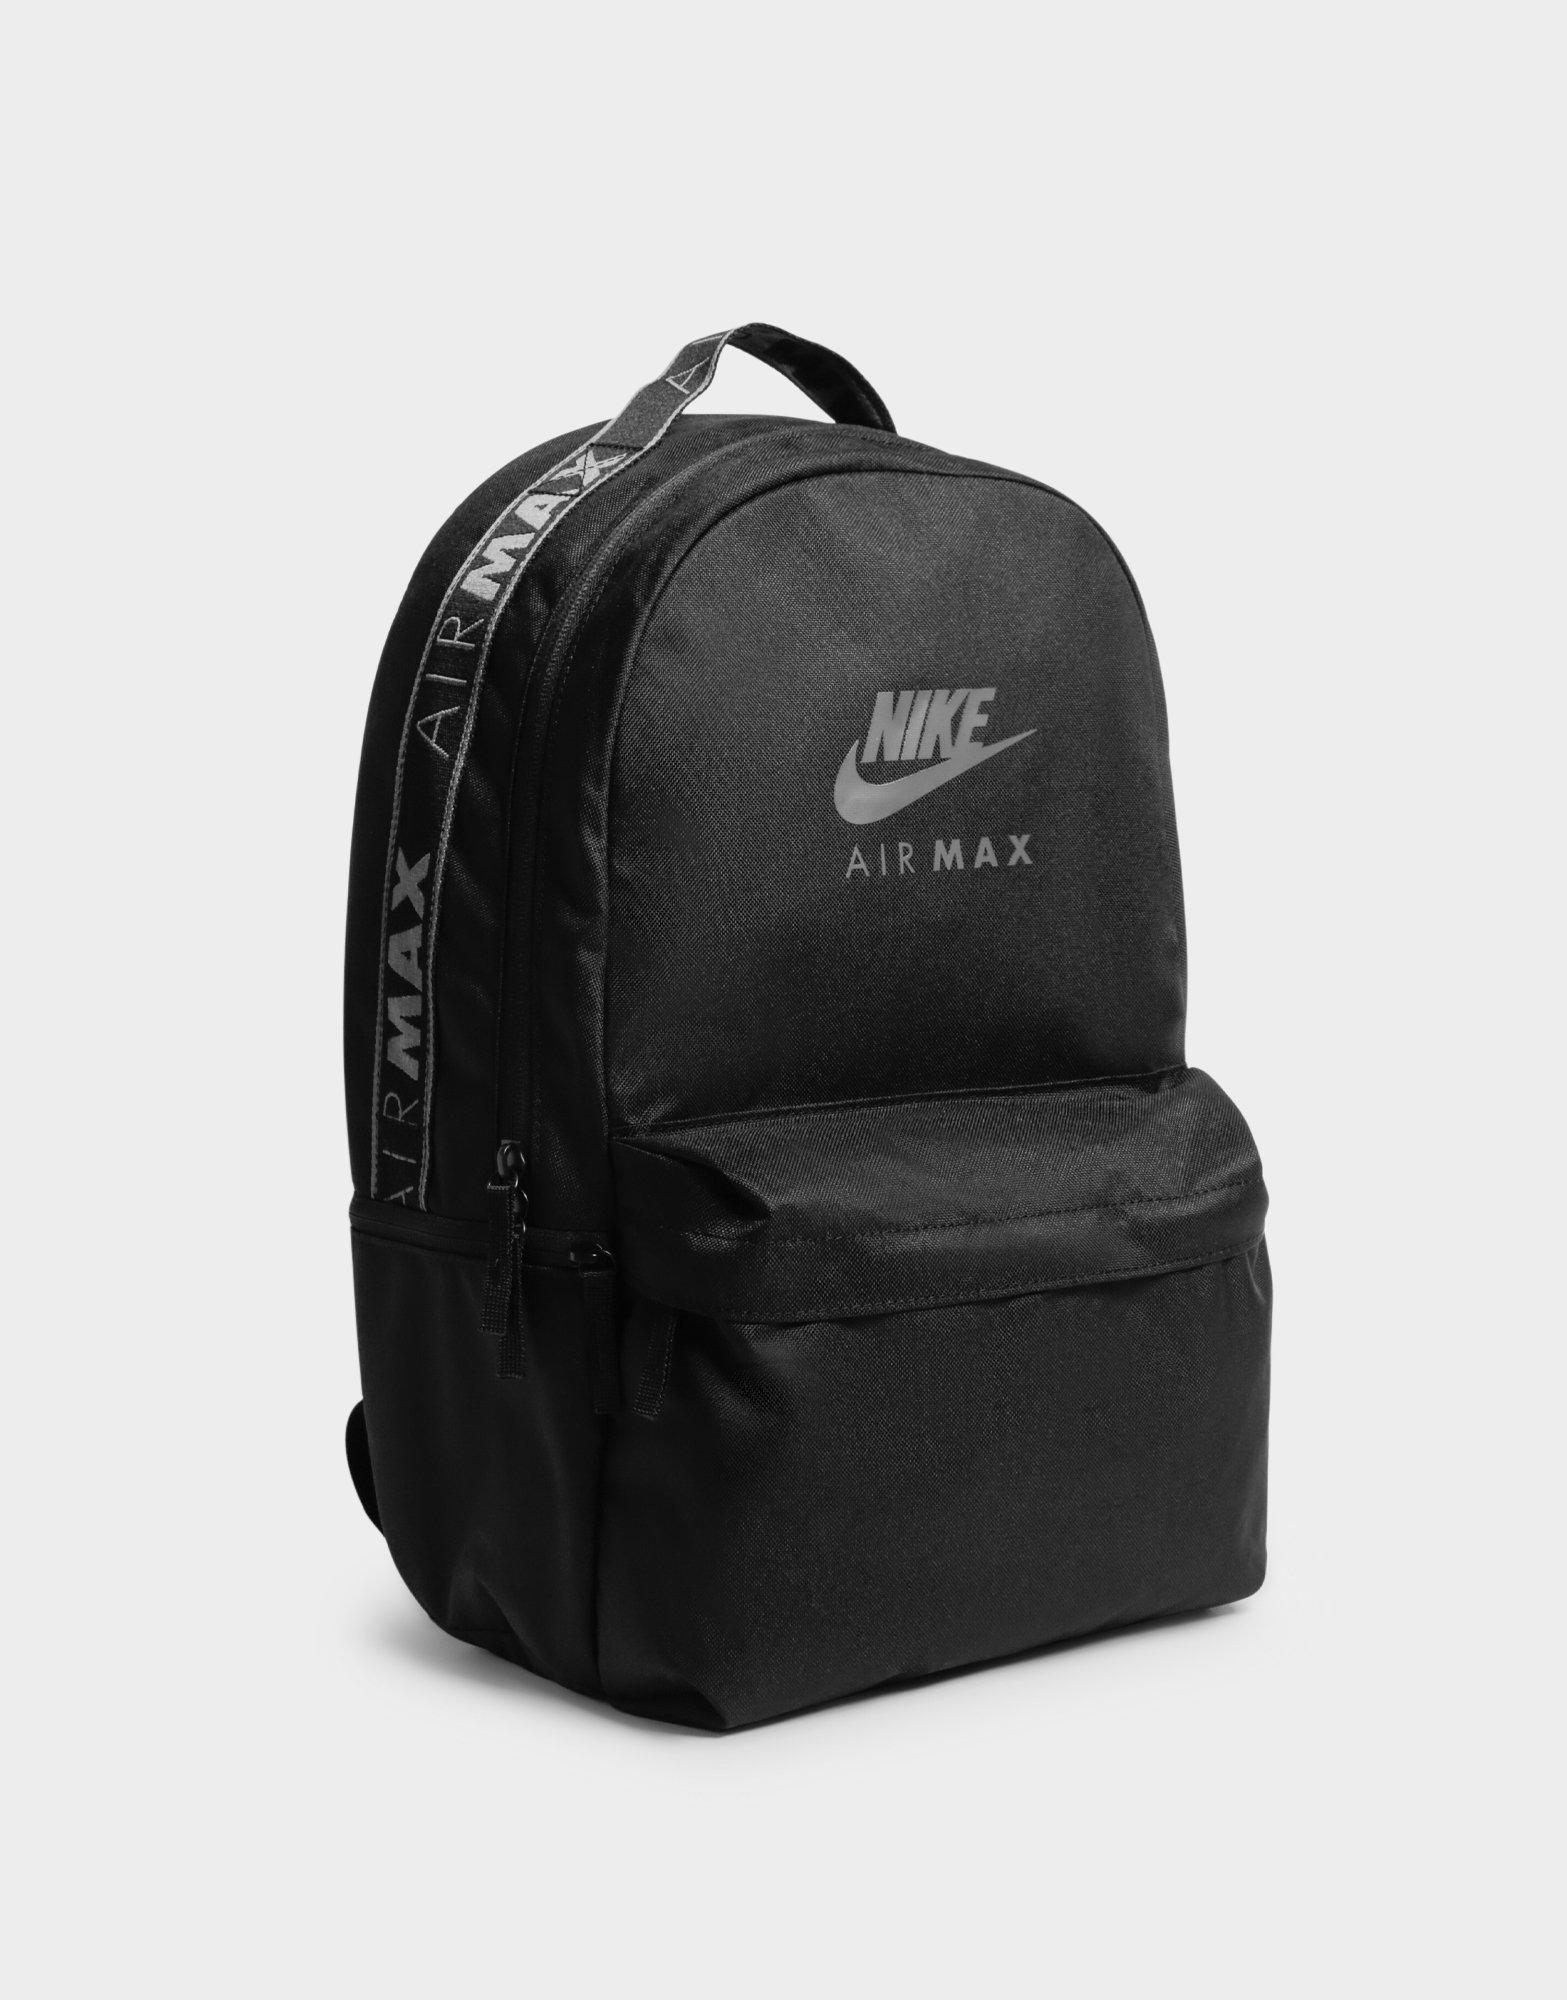 Nike Air Max Backpack in Black for Men - Lyst